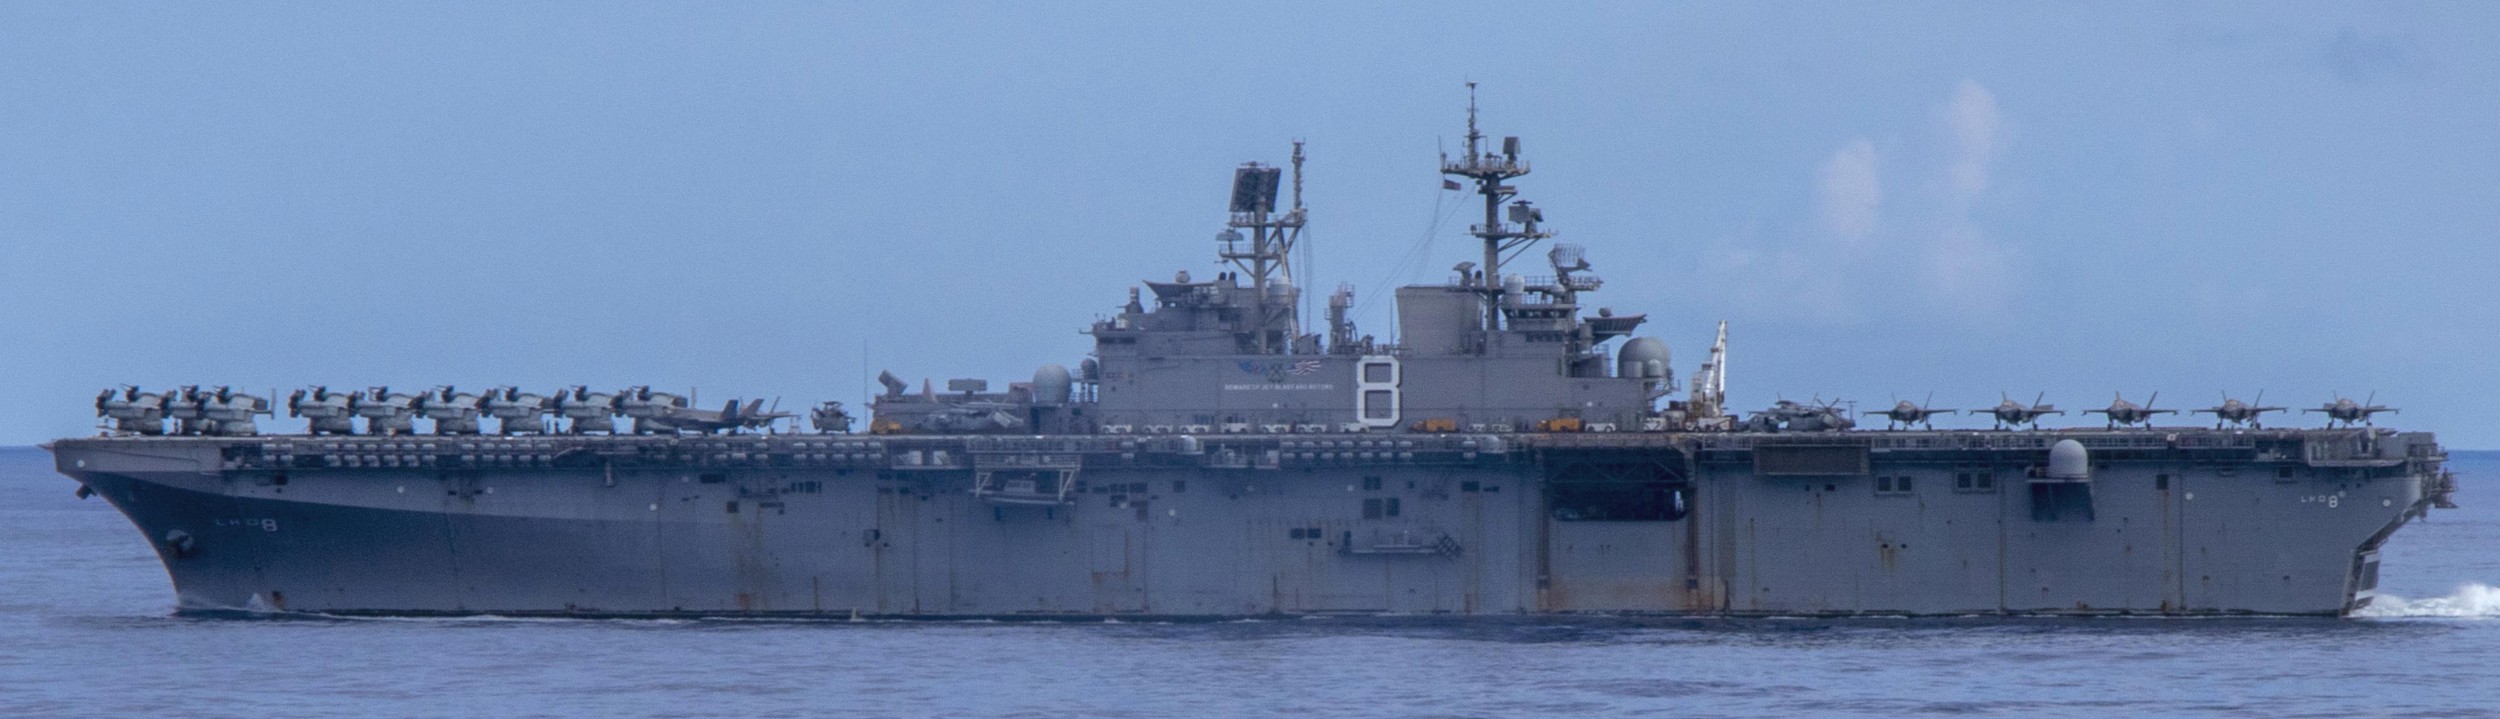 lhd-8 uss makin island amphibious assault ship landing helicopter dock us navy vmm-362 marines philippine sea 03